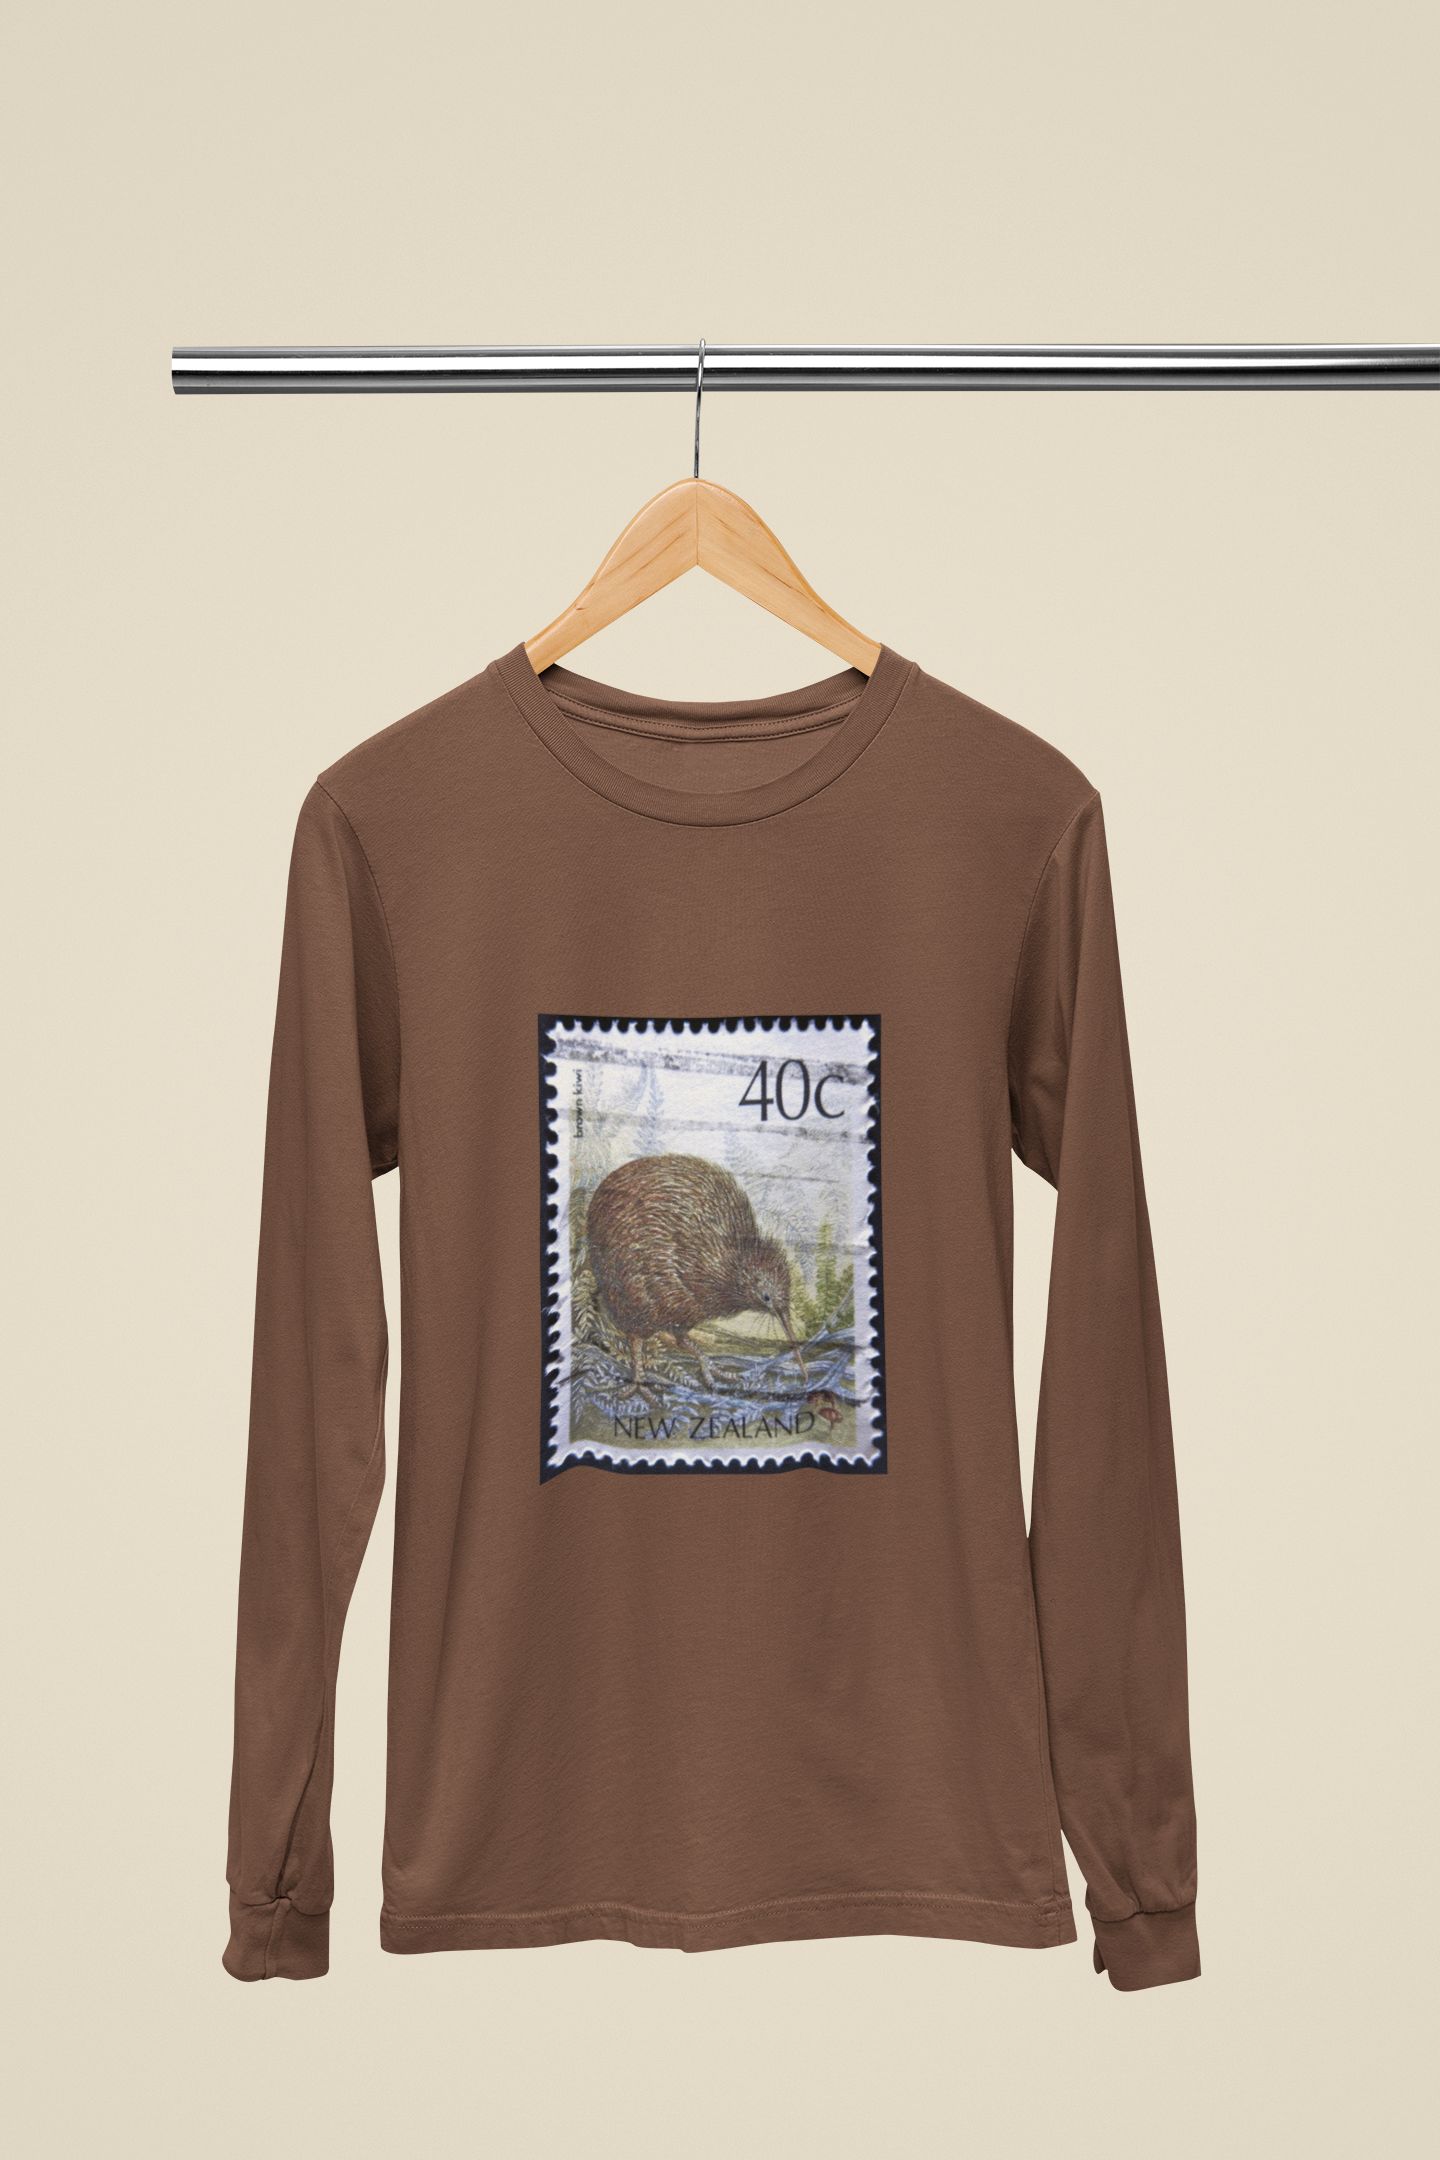 40c Kiwi Stamp  - Long Sleeve Tee